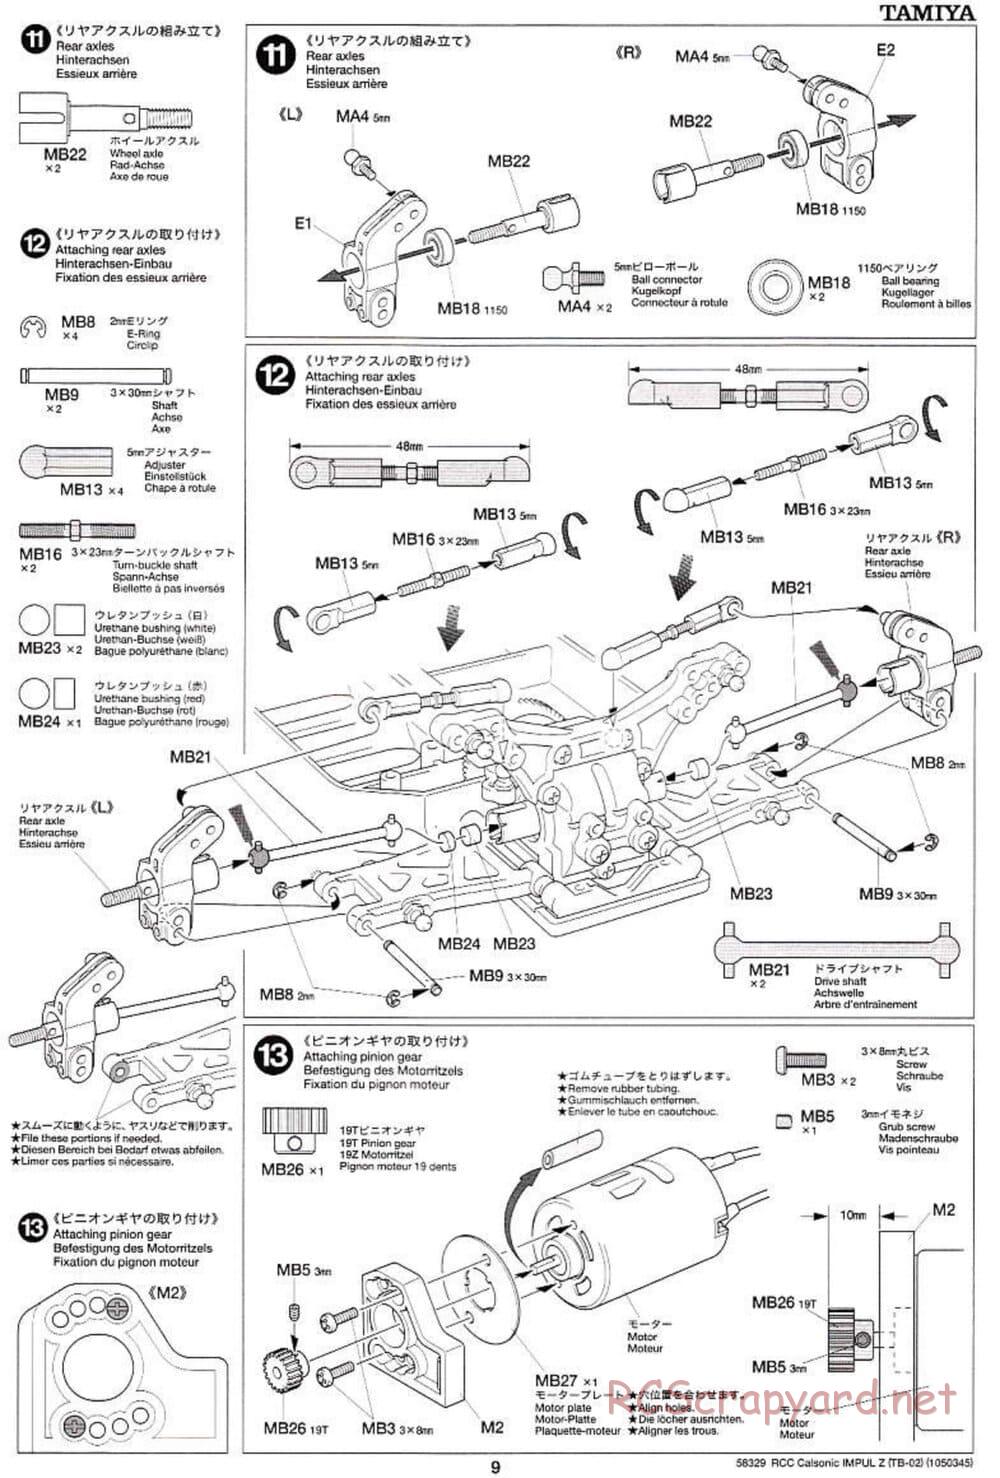 Tamiya - Calsonic Impul Z - TB-02 Chassis - Manual - Page 9